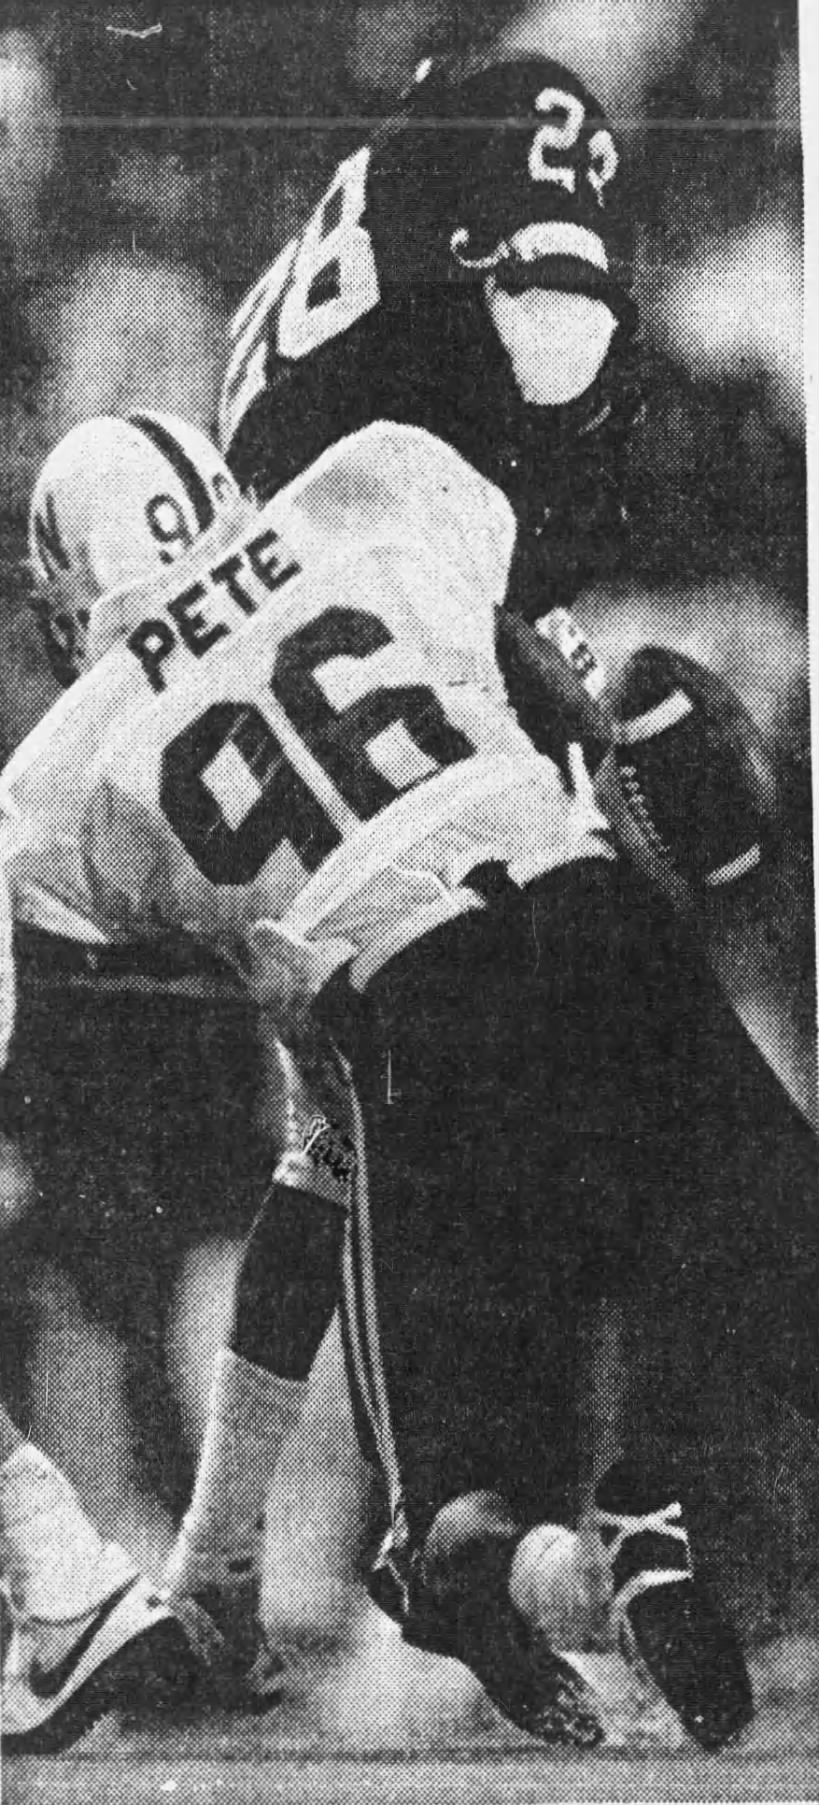 1988 Oklahoma Lawrence Pete